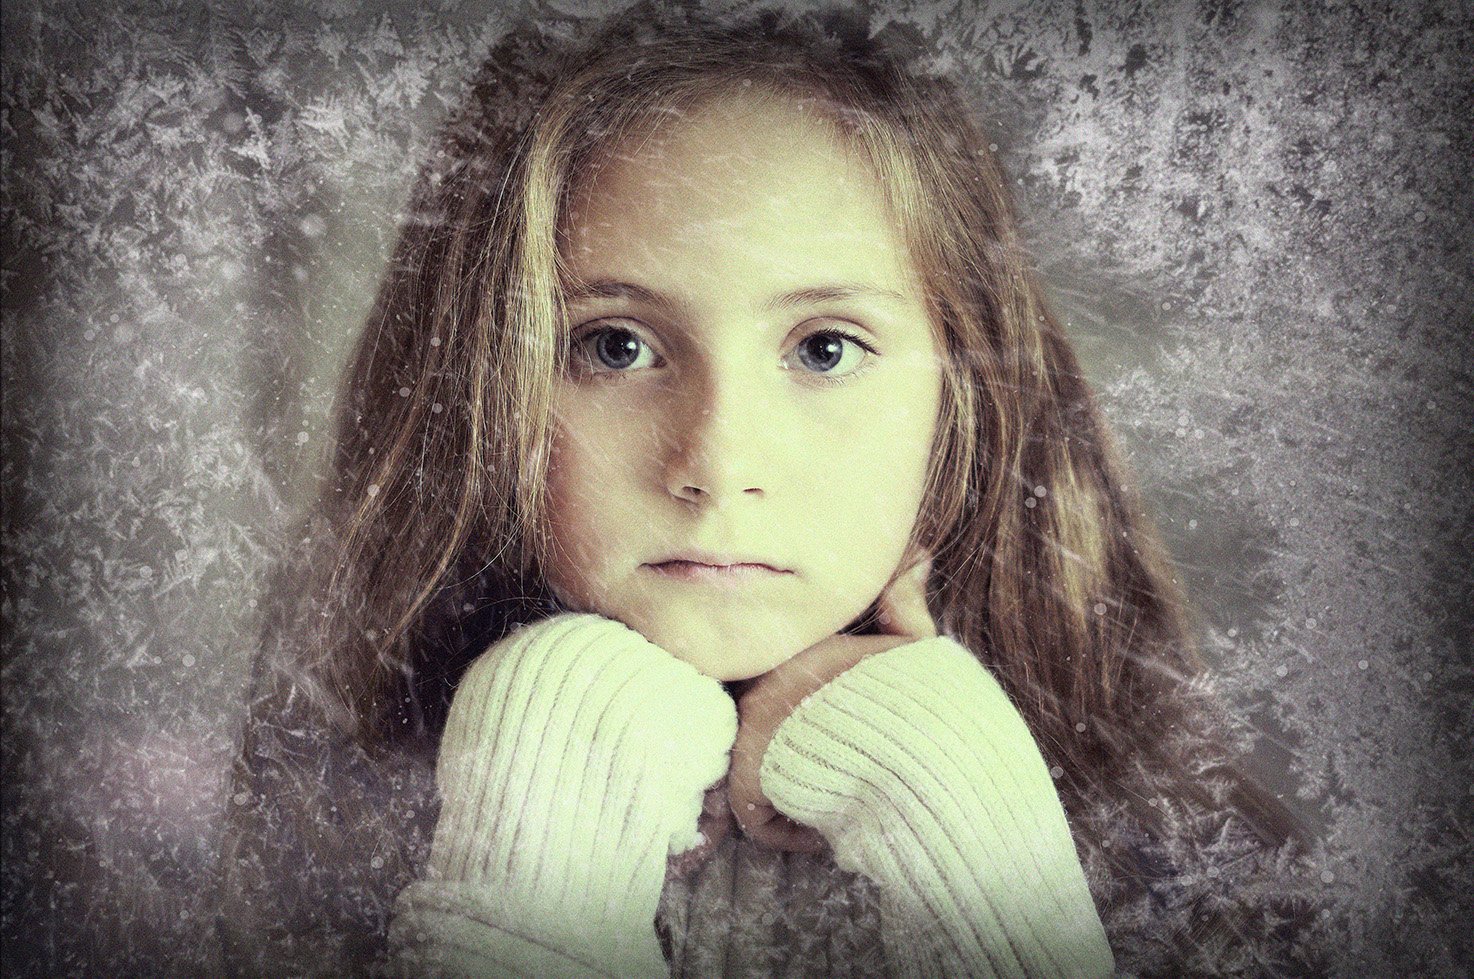 Winter, Window, Portrait, Girl, Child, Портрет, Ребенок, Девочка, Зима, Окно, Сергей Яблоков